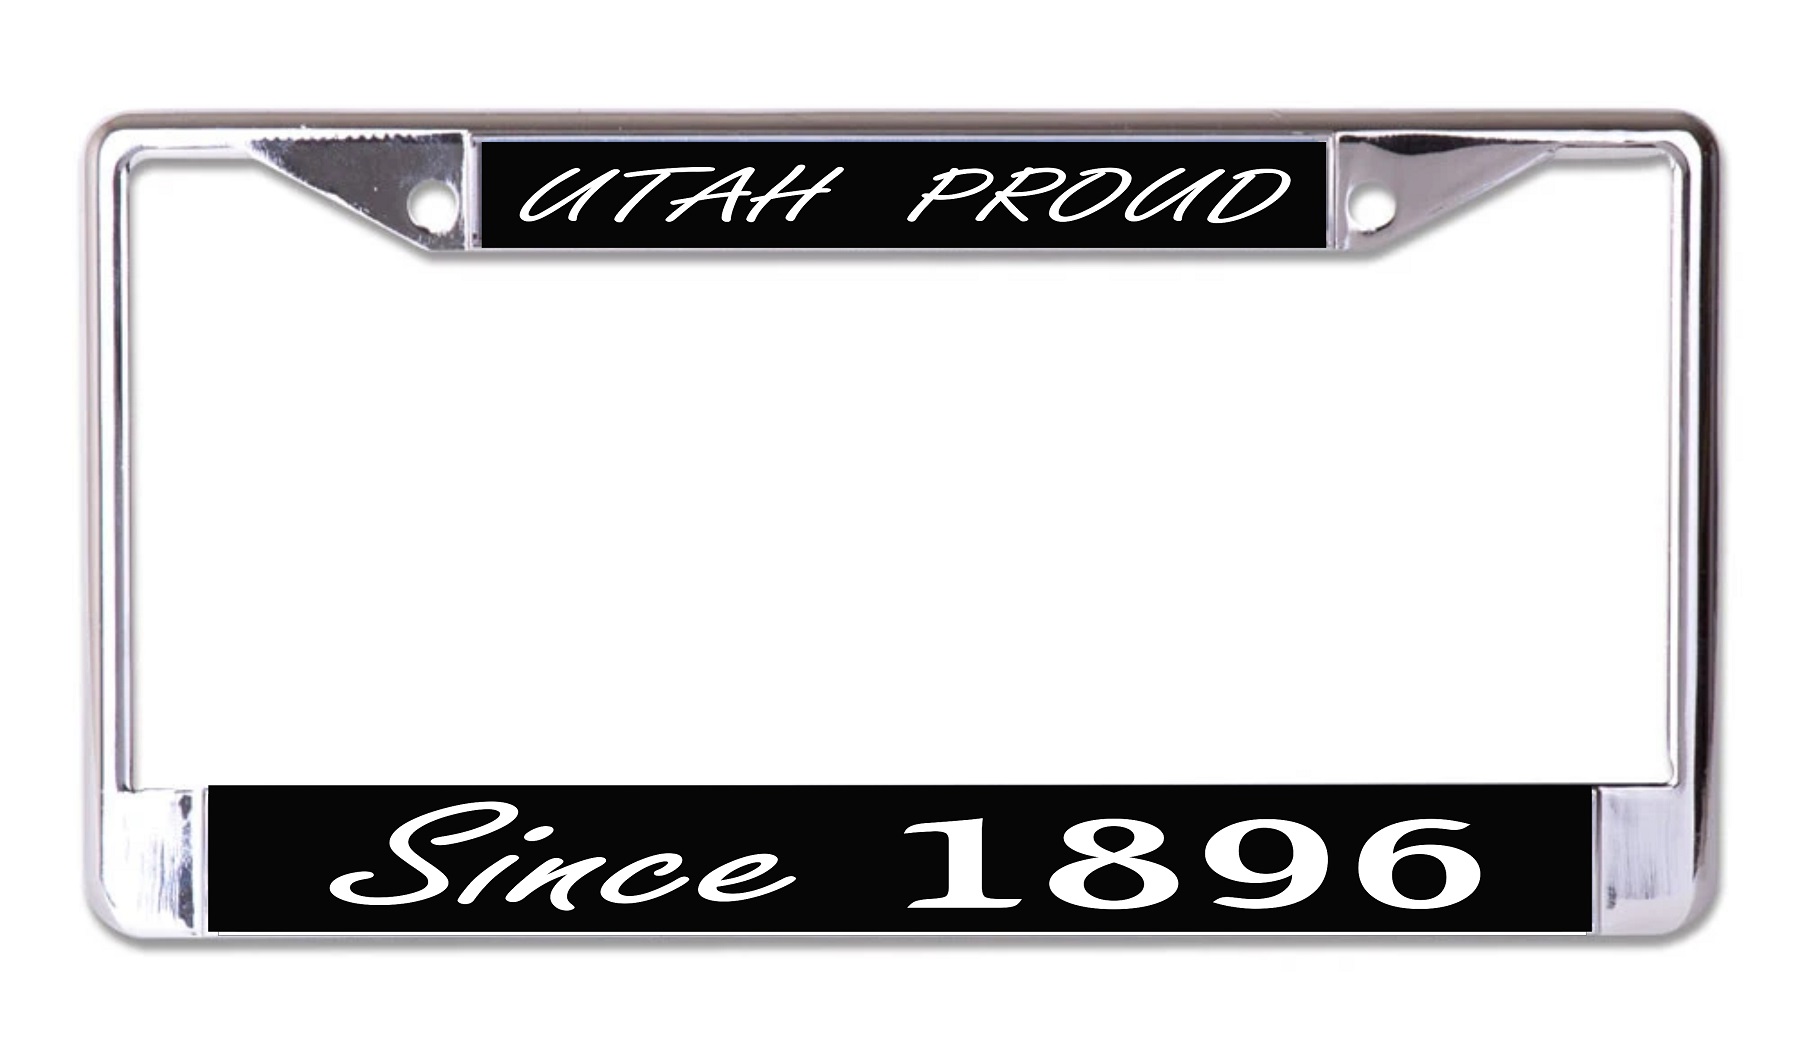 Utah Proud Since 1896 Chrome License Plate FRAME